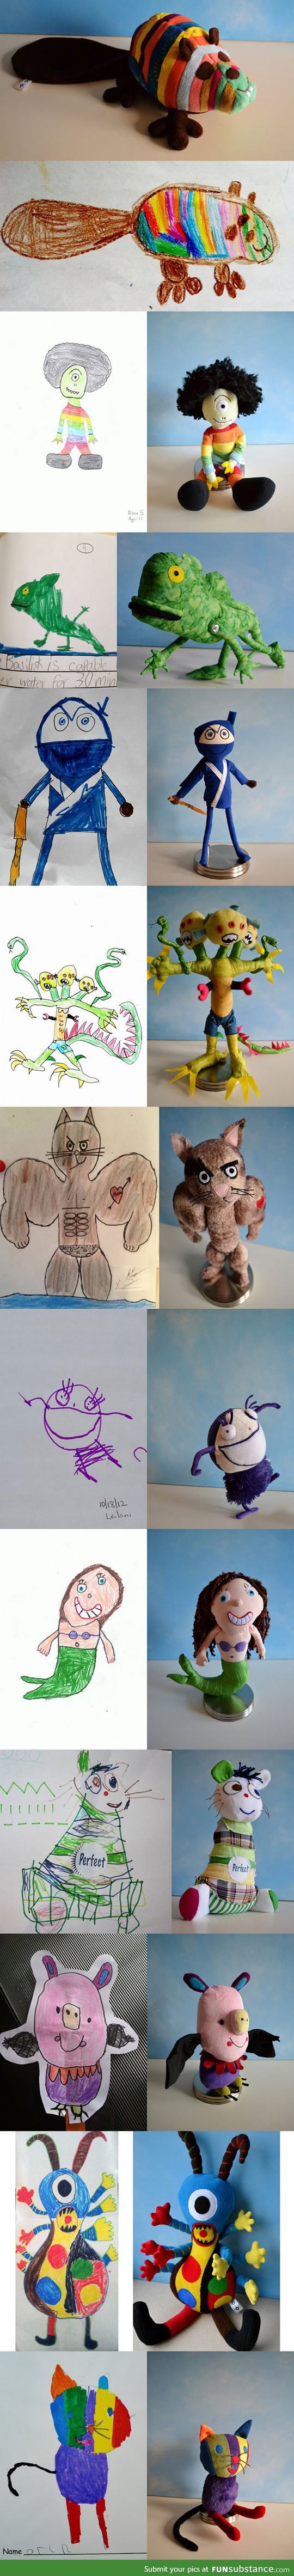 Artist transforms kids drawings into plush toys